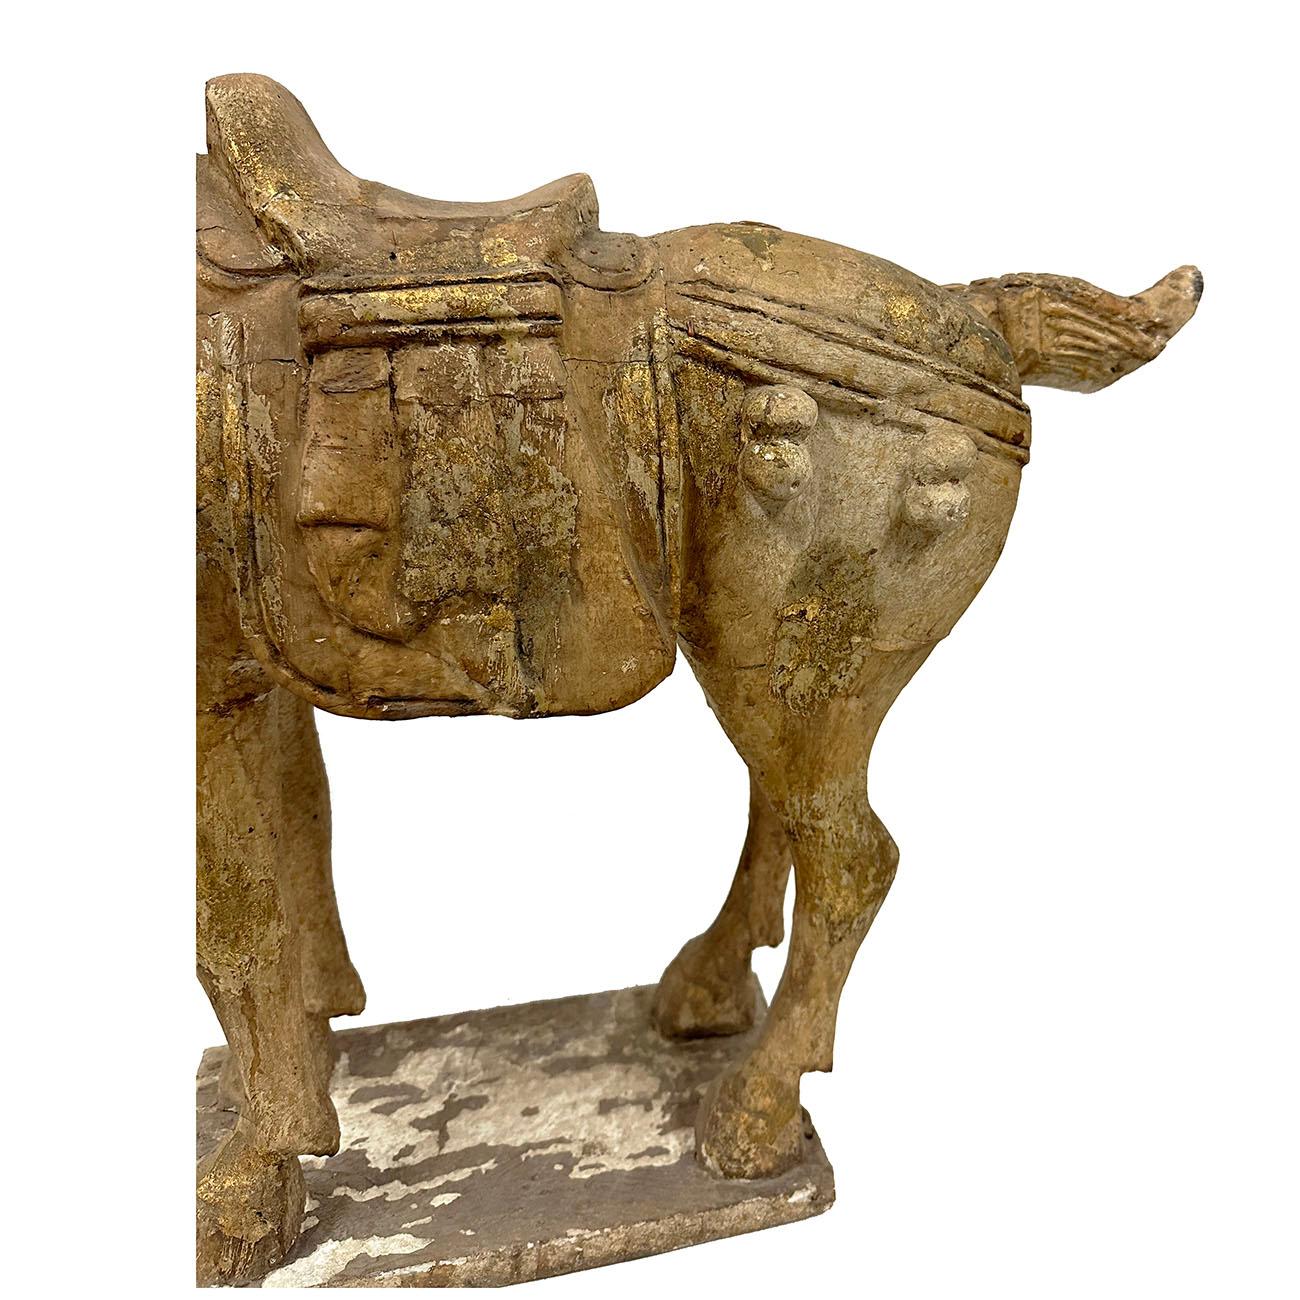 Chinesische vergoldete, geschnitzte Tang-Pferd-Skulptur aus Holz, 20. Jahrhundert (Chinesischer Export) im Angebot